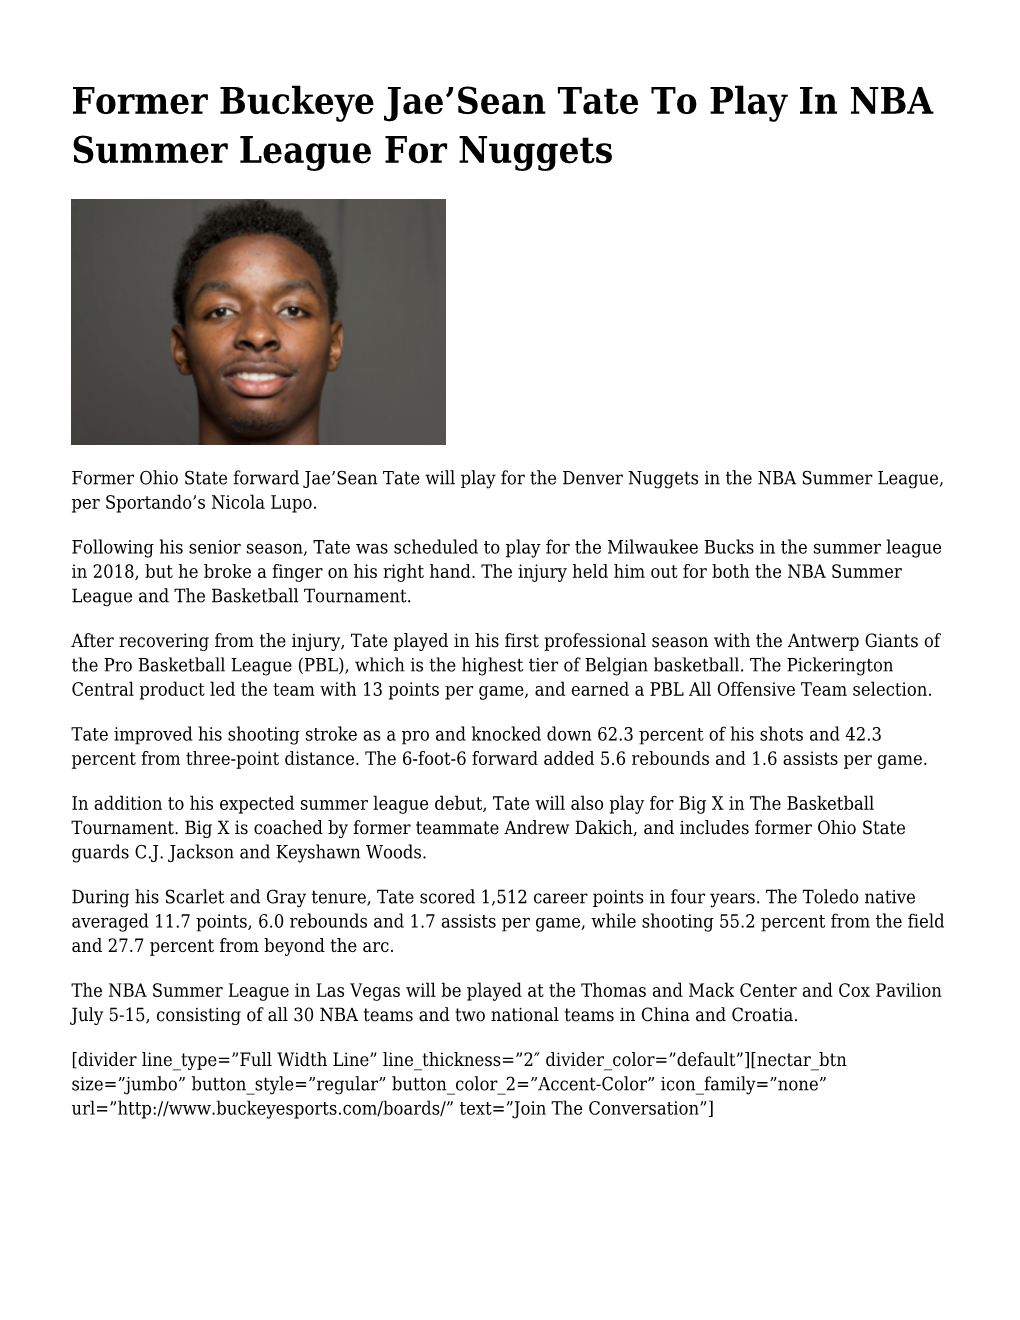 Former Buckeye Jae'sean Tate to Play in NBA Summer League for Nuggets